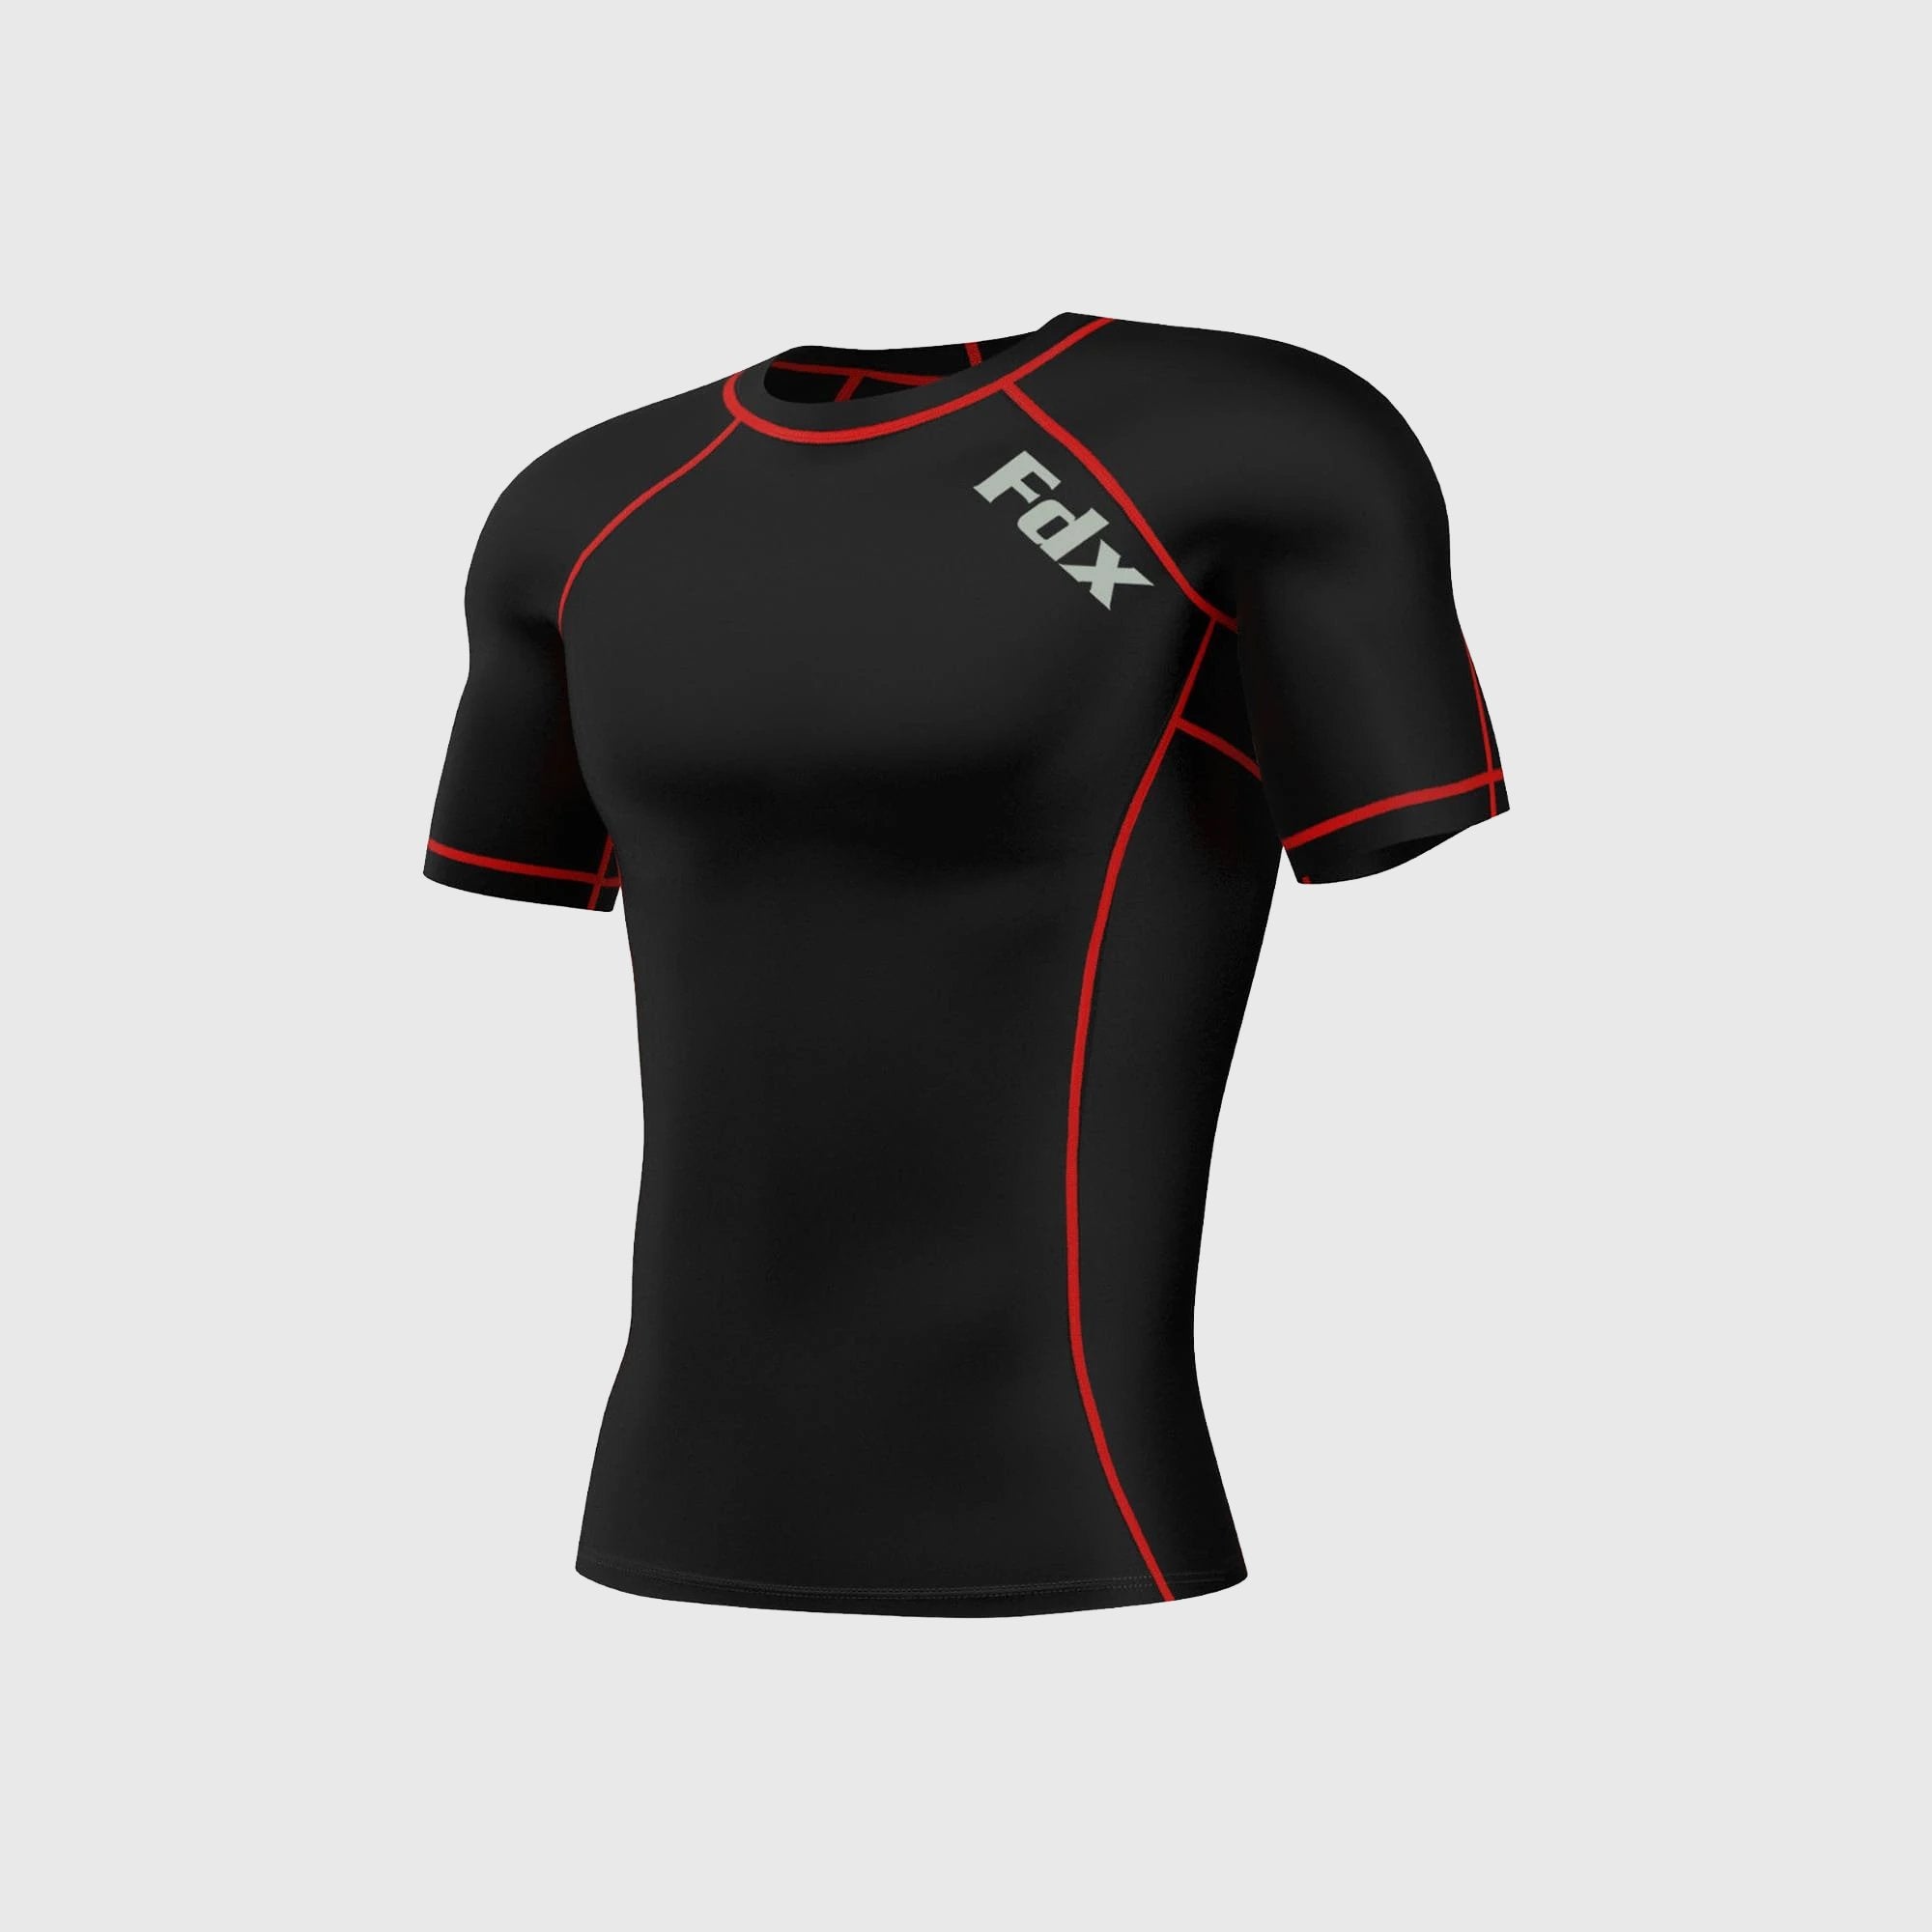 Fdx Cosmic Black Men's Short Sleeve Base Layer Gym Shirt